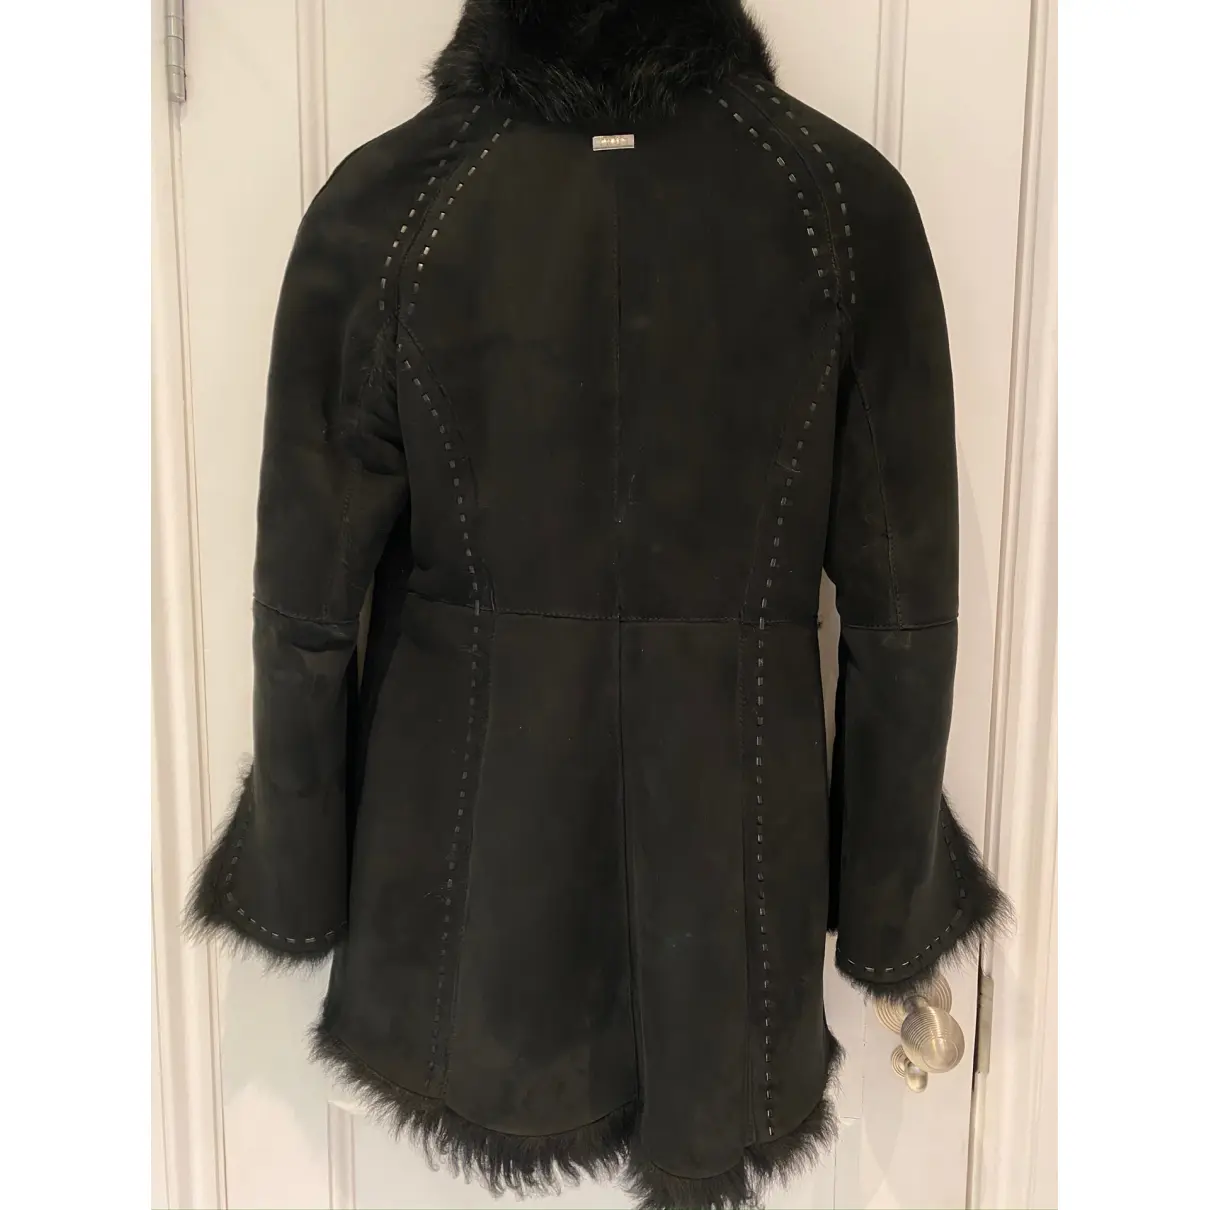 Buy Trussardi Shearling coat online